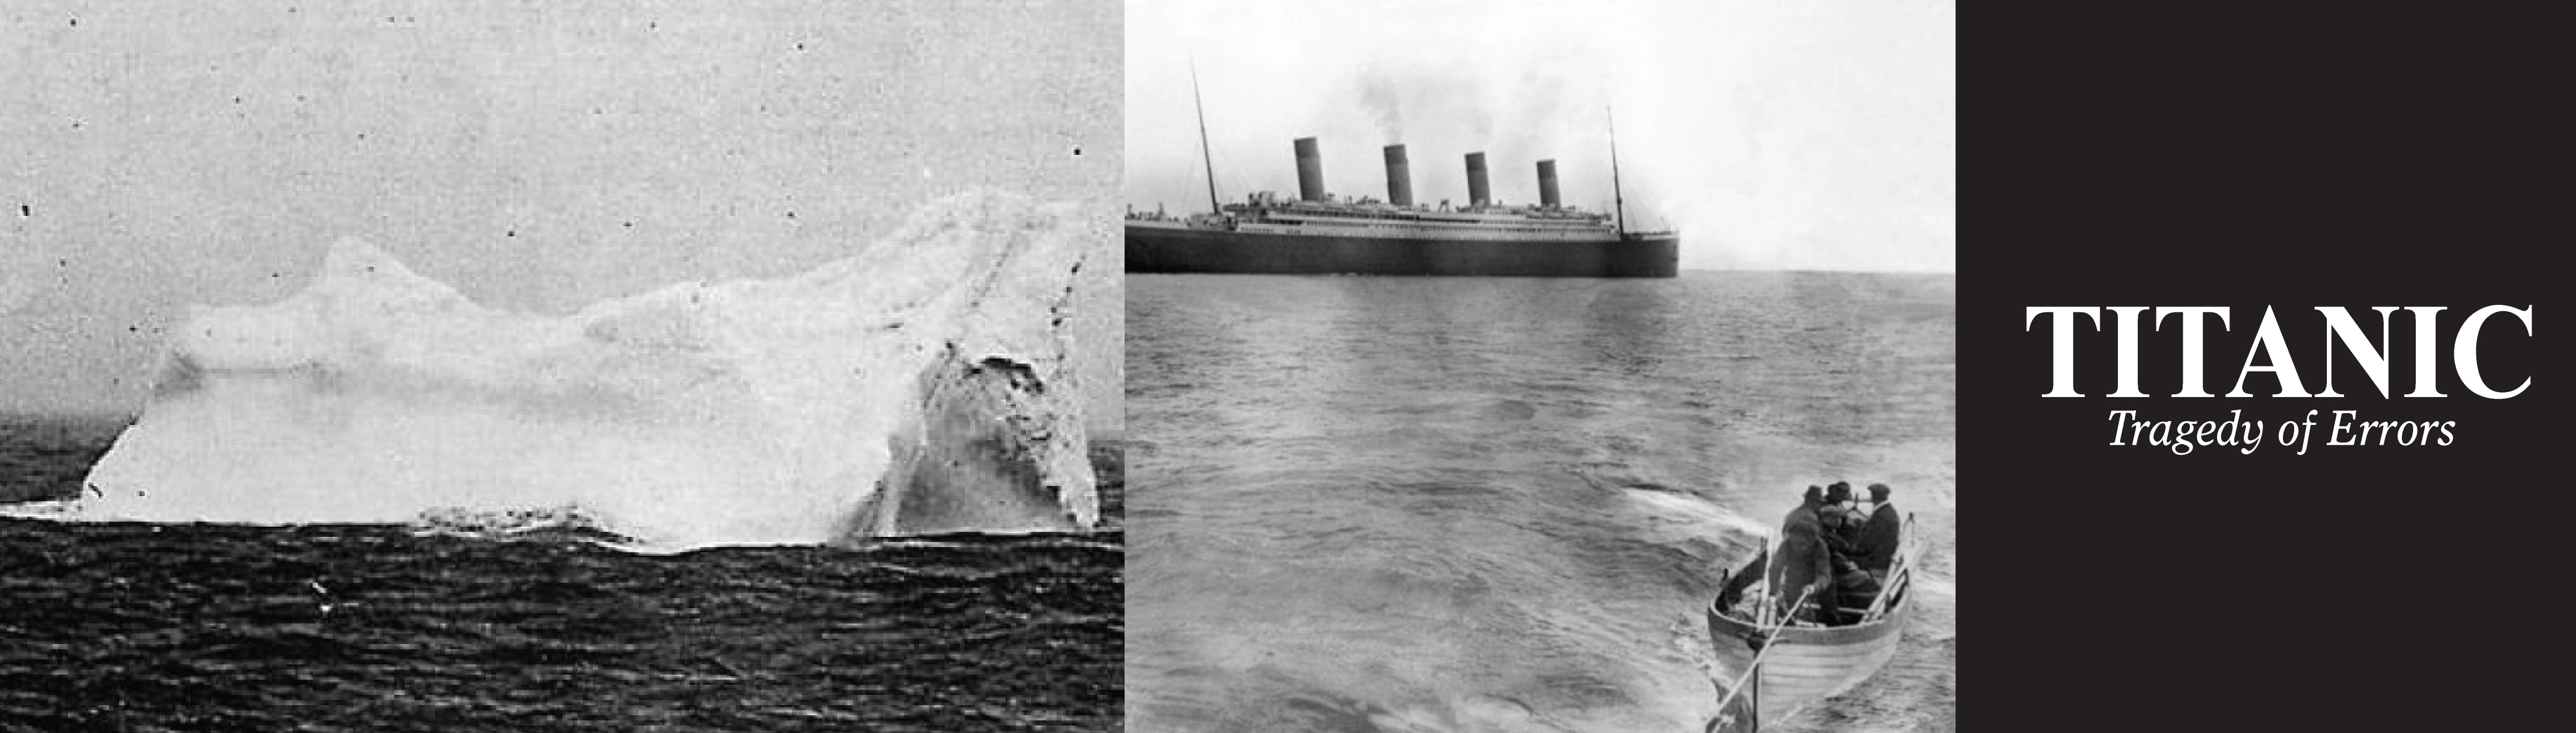 Titanic, Tradegy of Errors Show